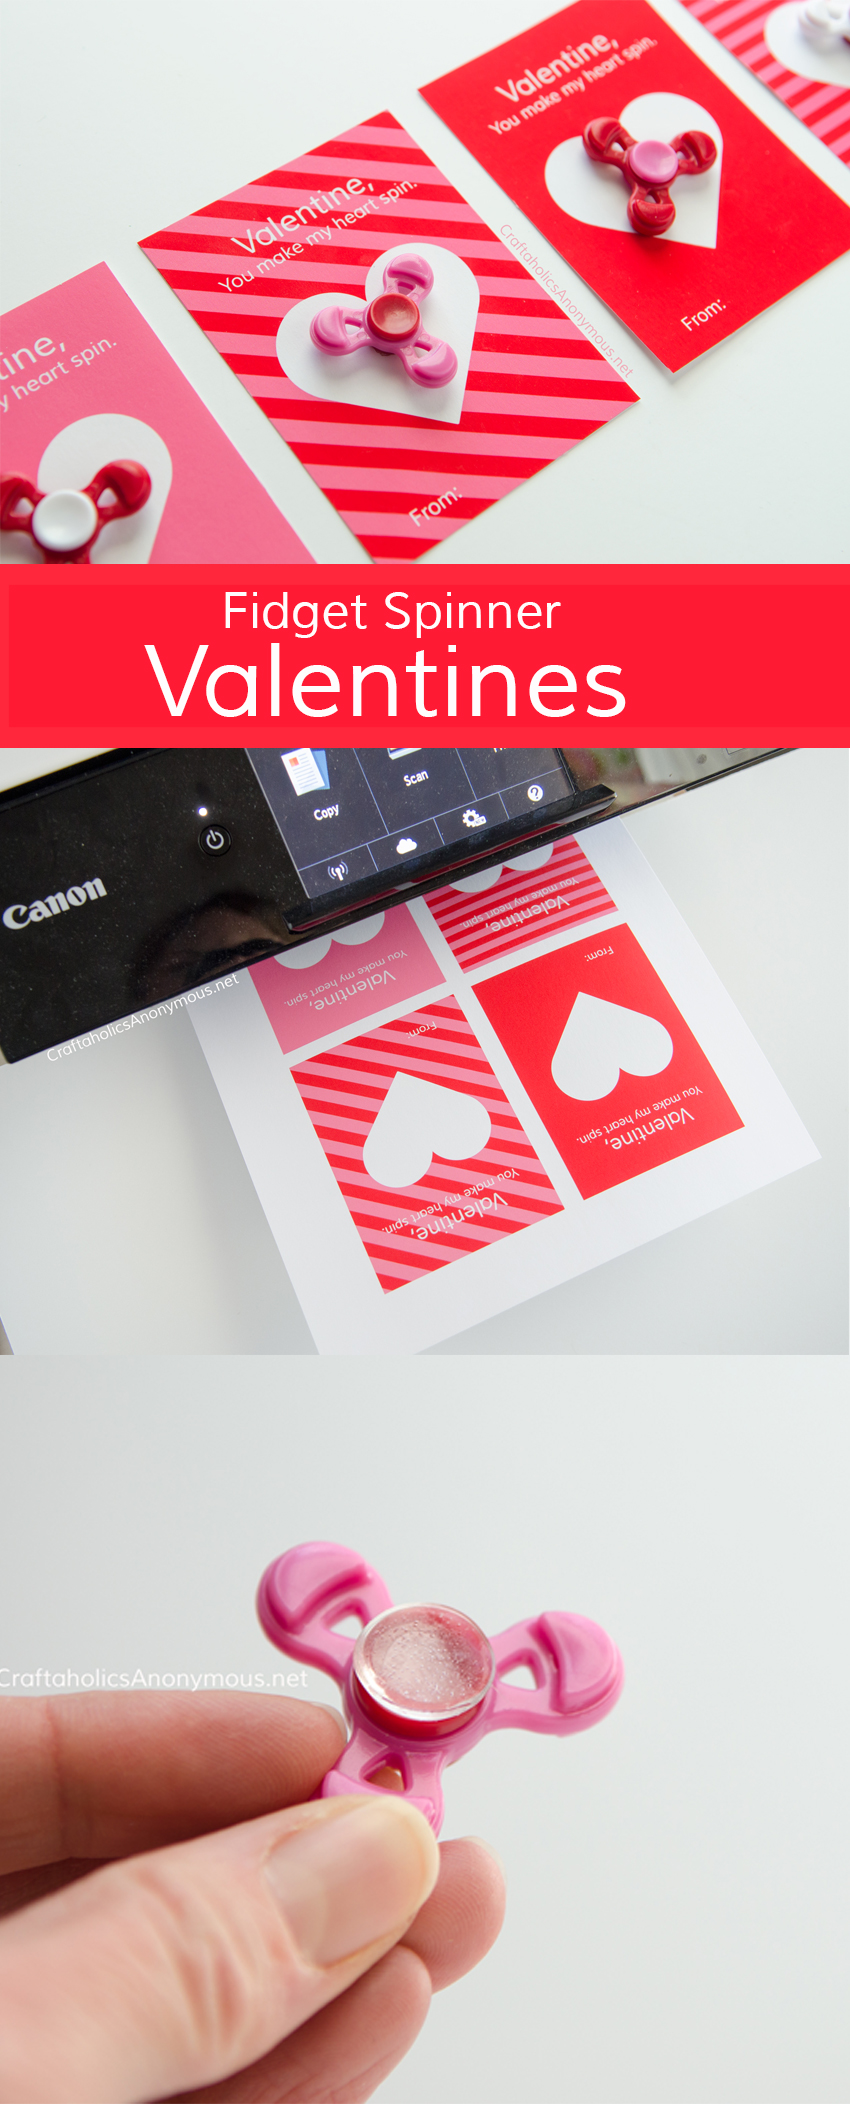 Free Fidget Spinner Valentines Printables